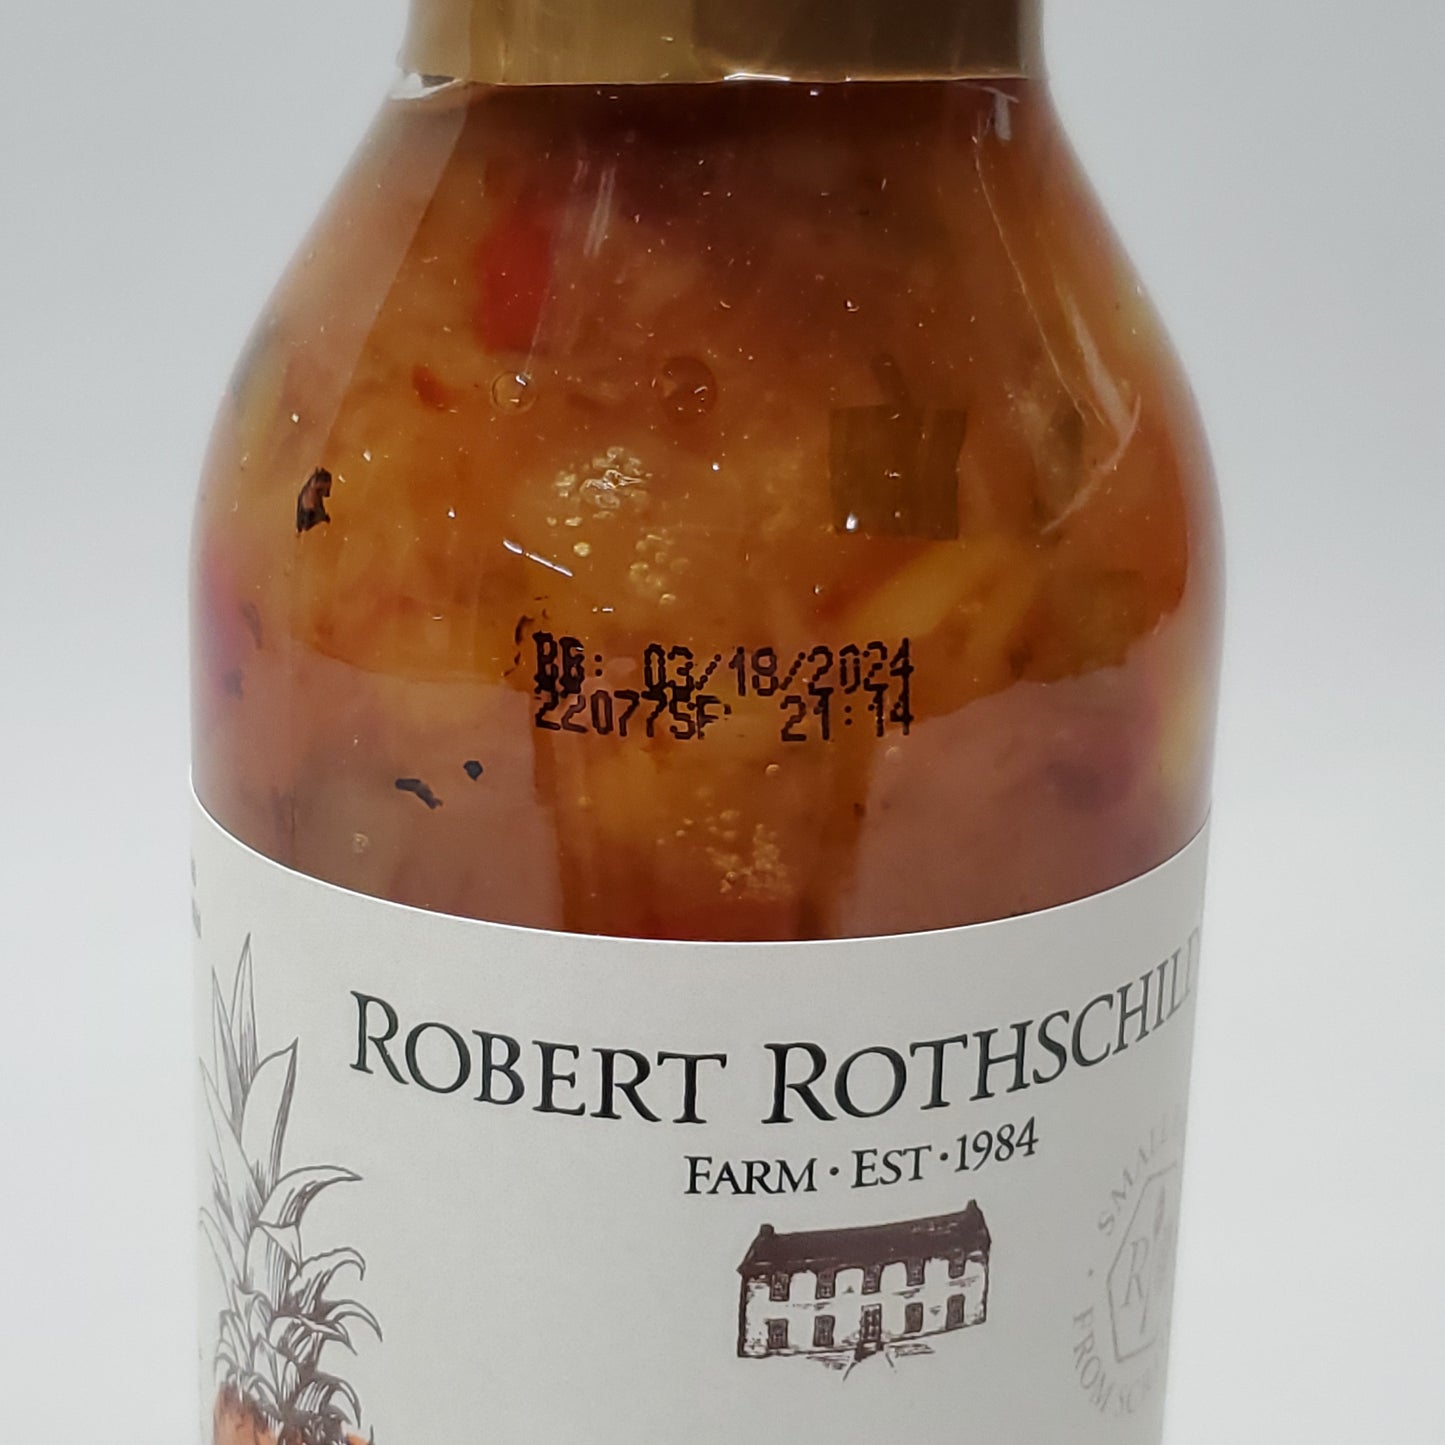 ROBERT ROTHSCHILD 6-PK of Roasted Pineapple & Habanero Glaze & Finishing Sauce 12.7 oz 03/24